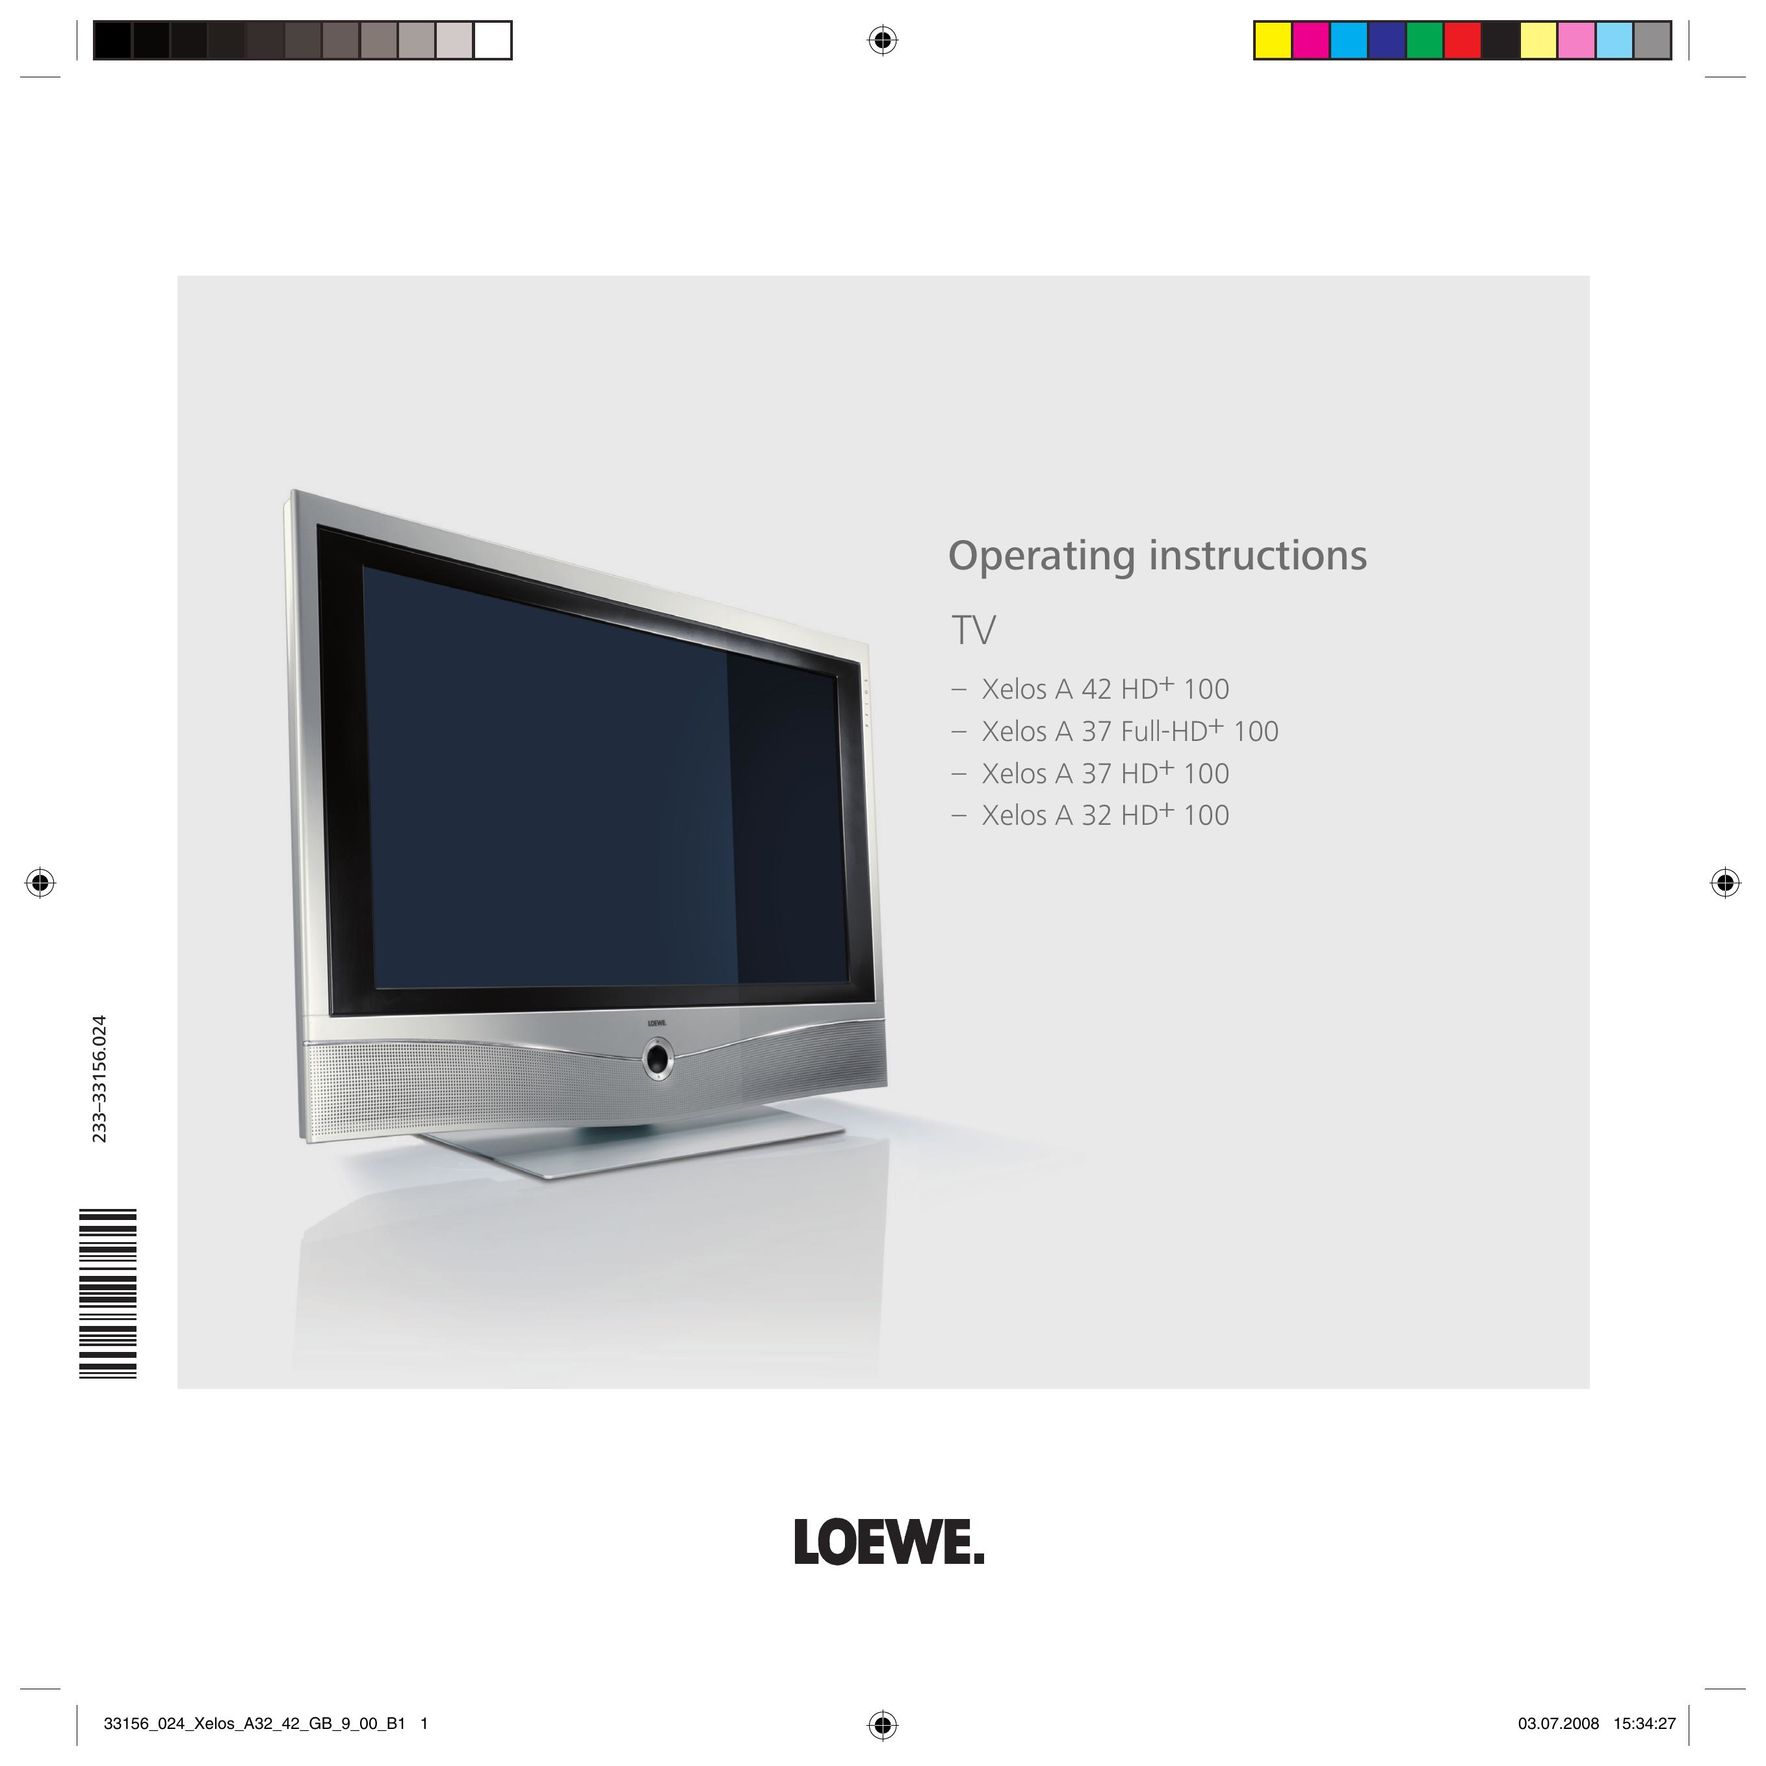 Loewe A 37 HD+ 100 Flat Panel Television User Manual